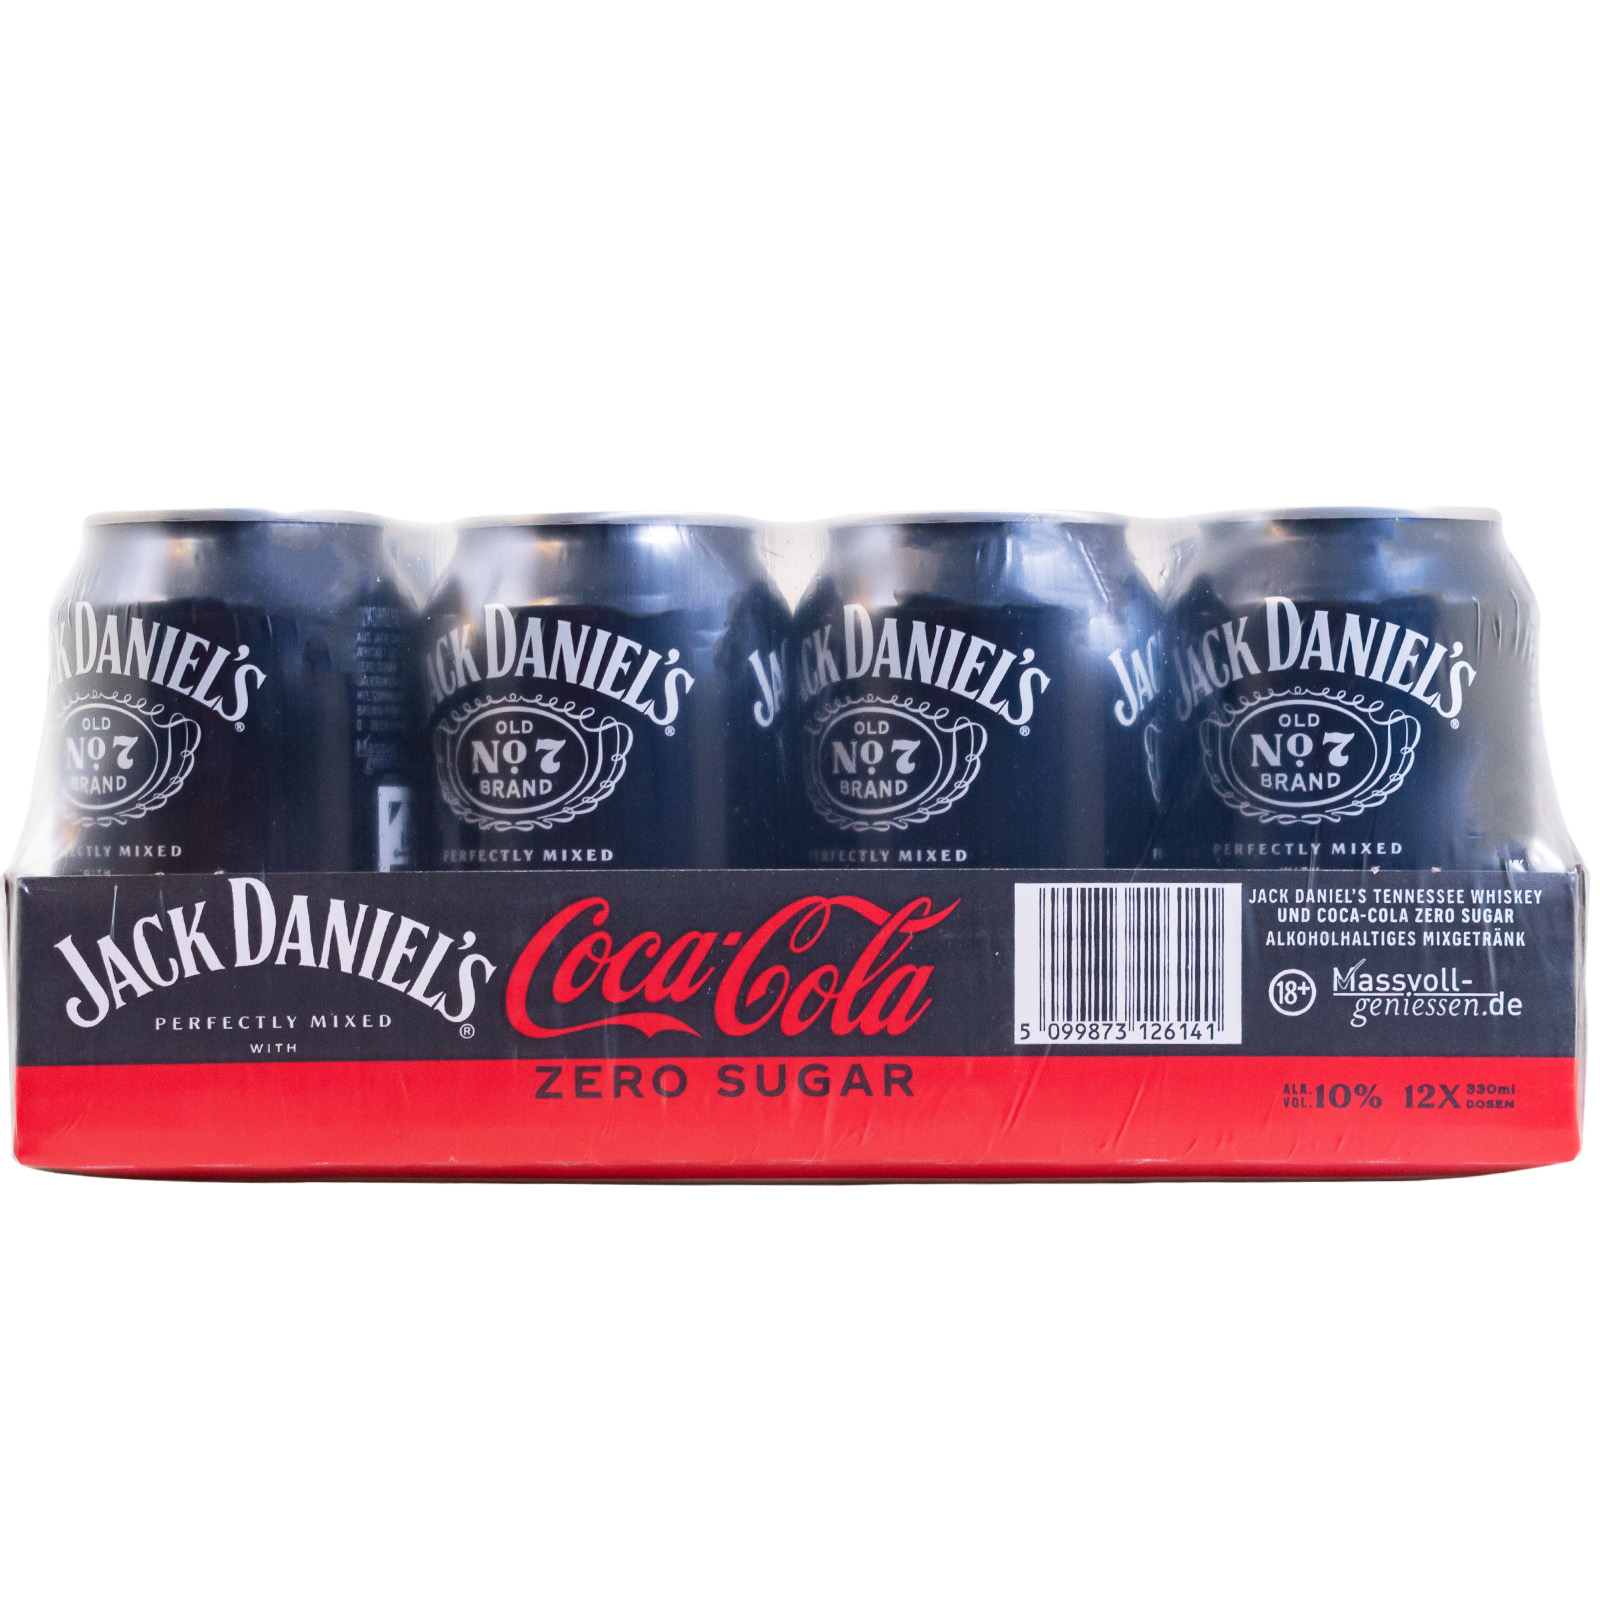 Paket [24 x 0,33L] Jack Daniels Tennessee Whisky & Coca Cola Zero Dose - 7,92L 10% vol